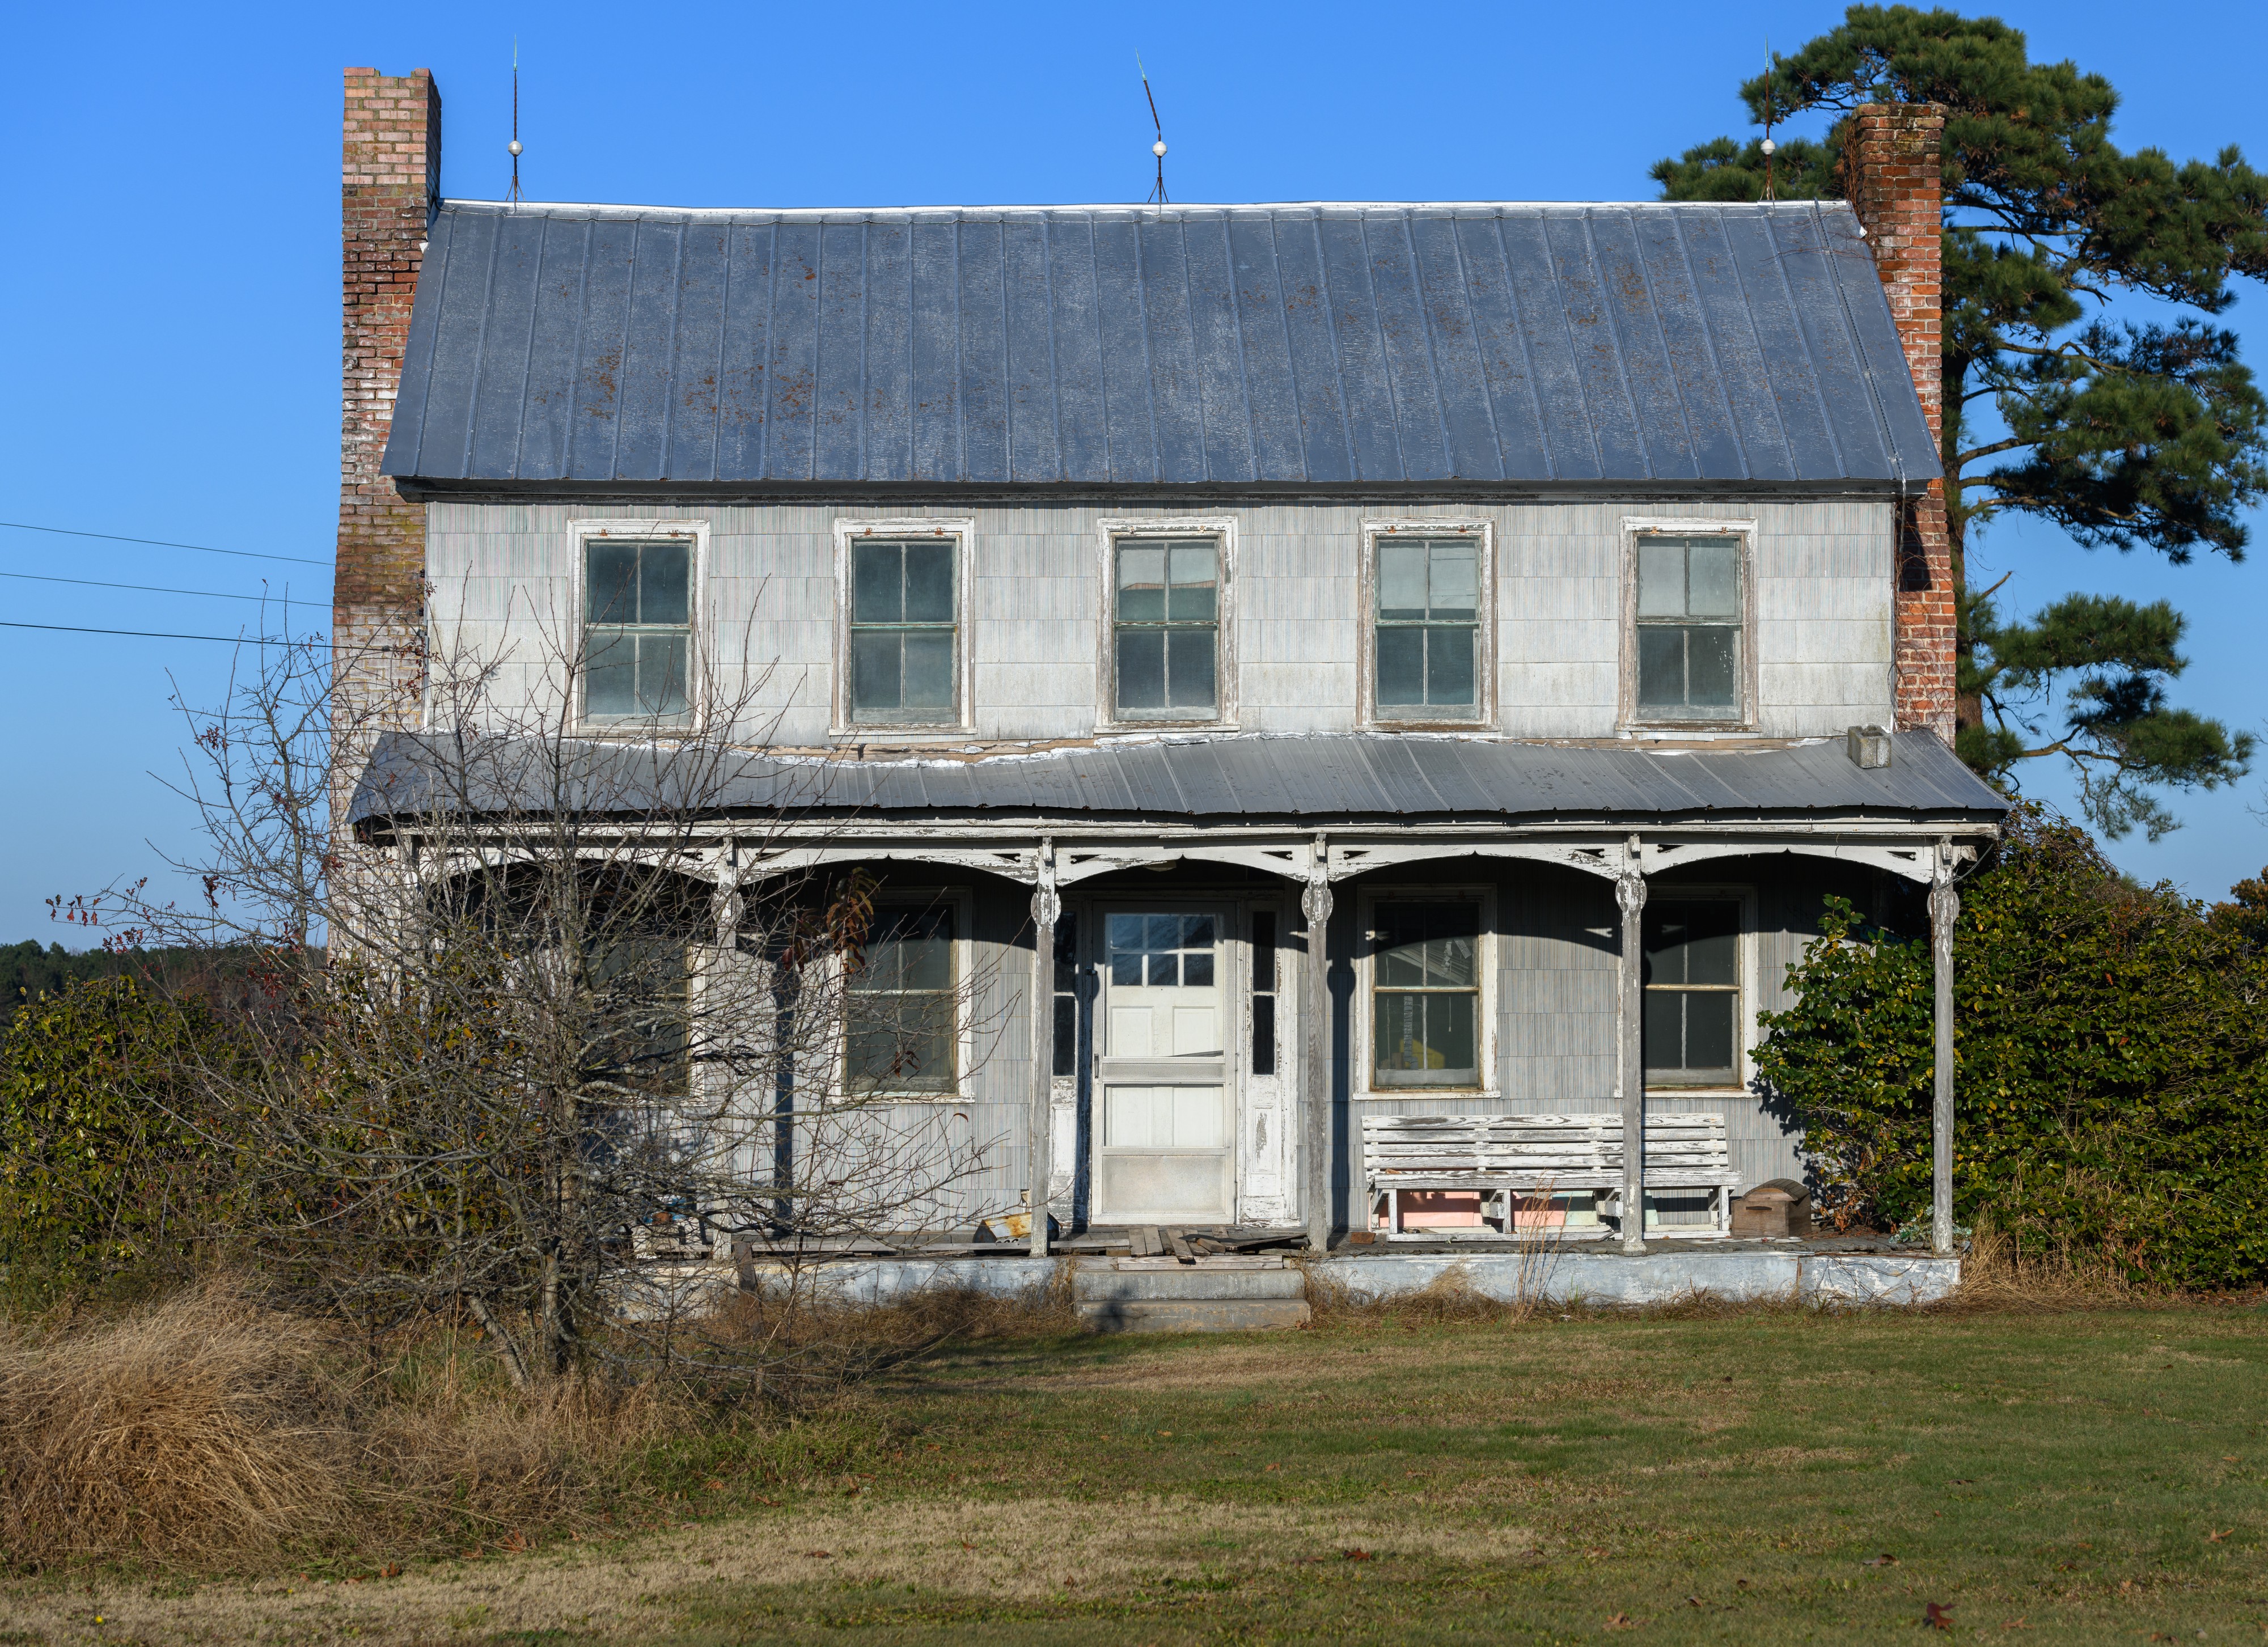 Abandoned Virginia farmhouse in Creeds LR